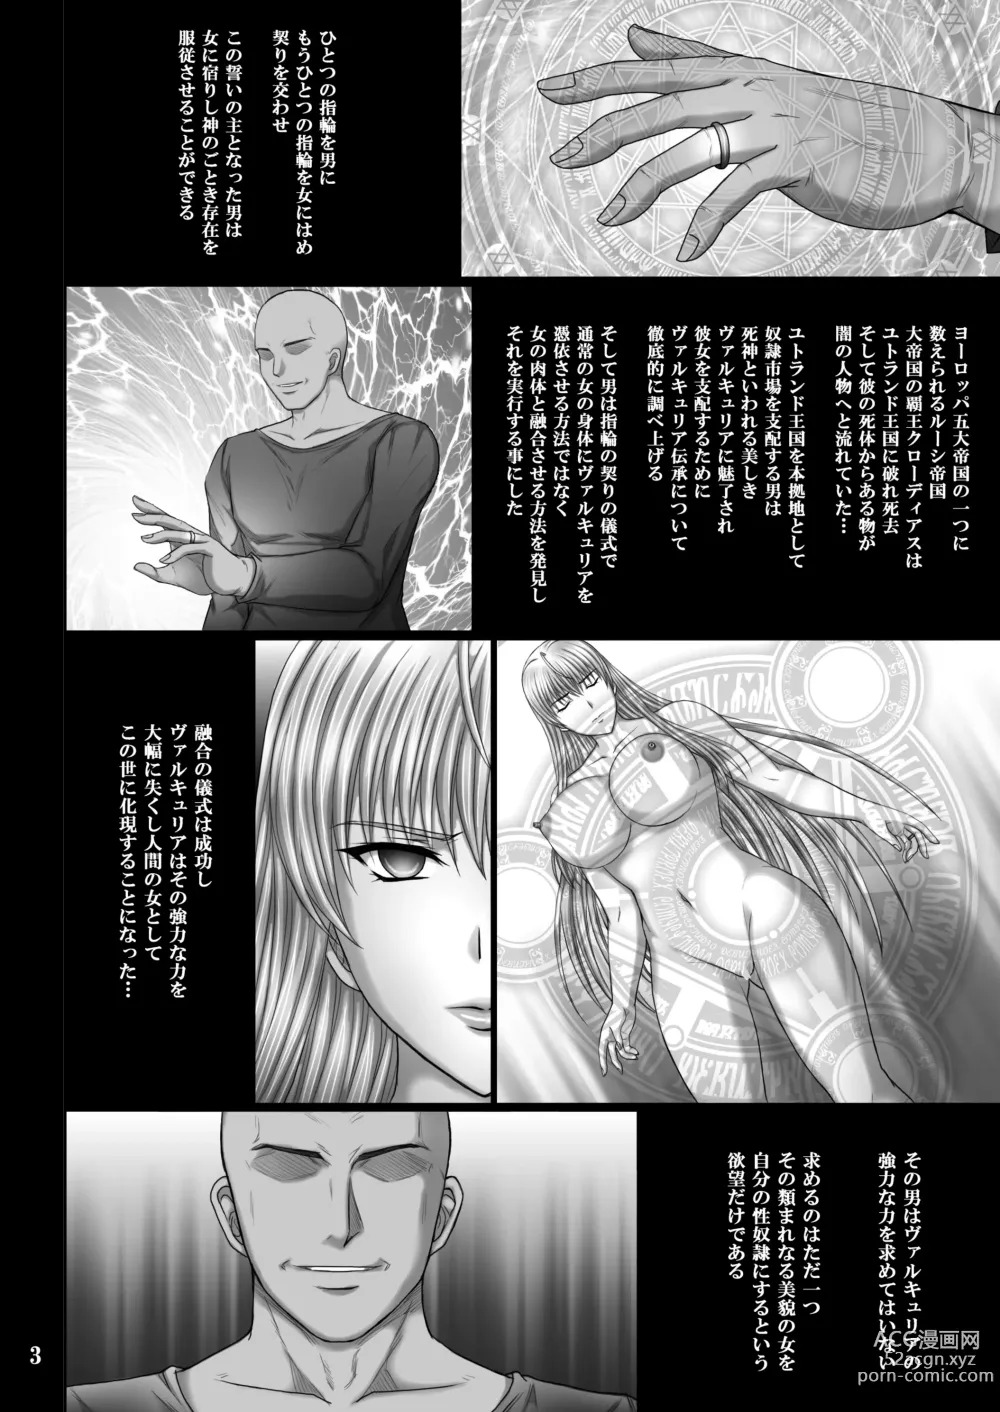 Page 3 of doujinshi Seido no Chigiri VALKYRIA SLAVE